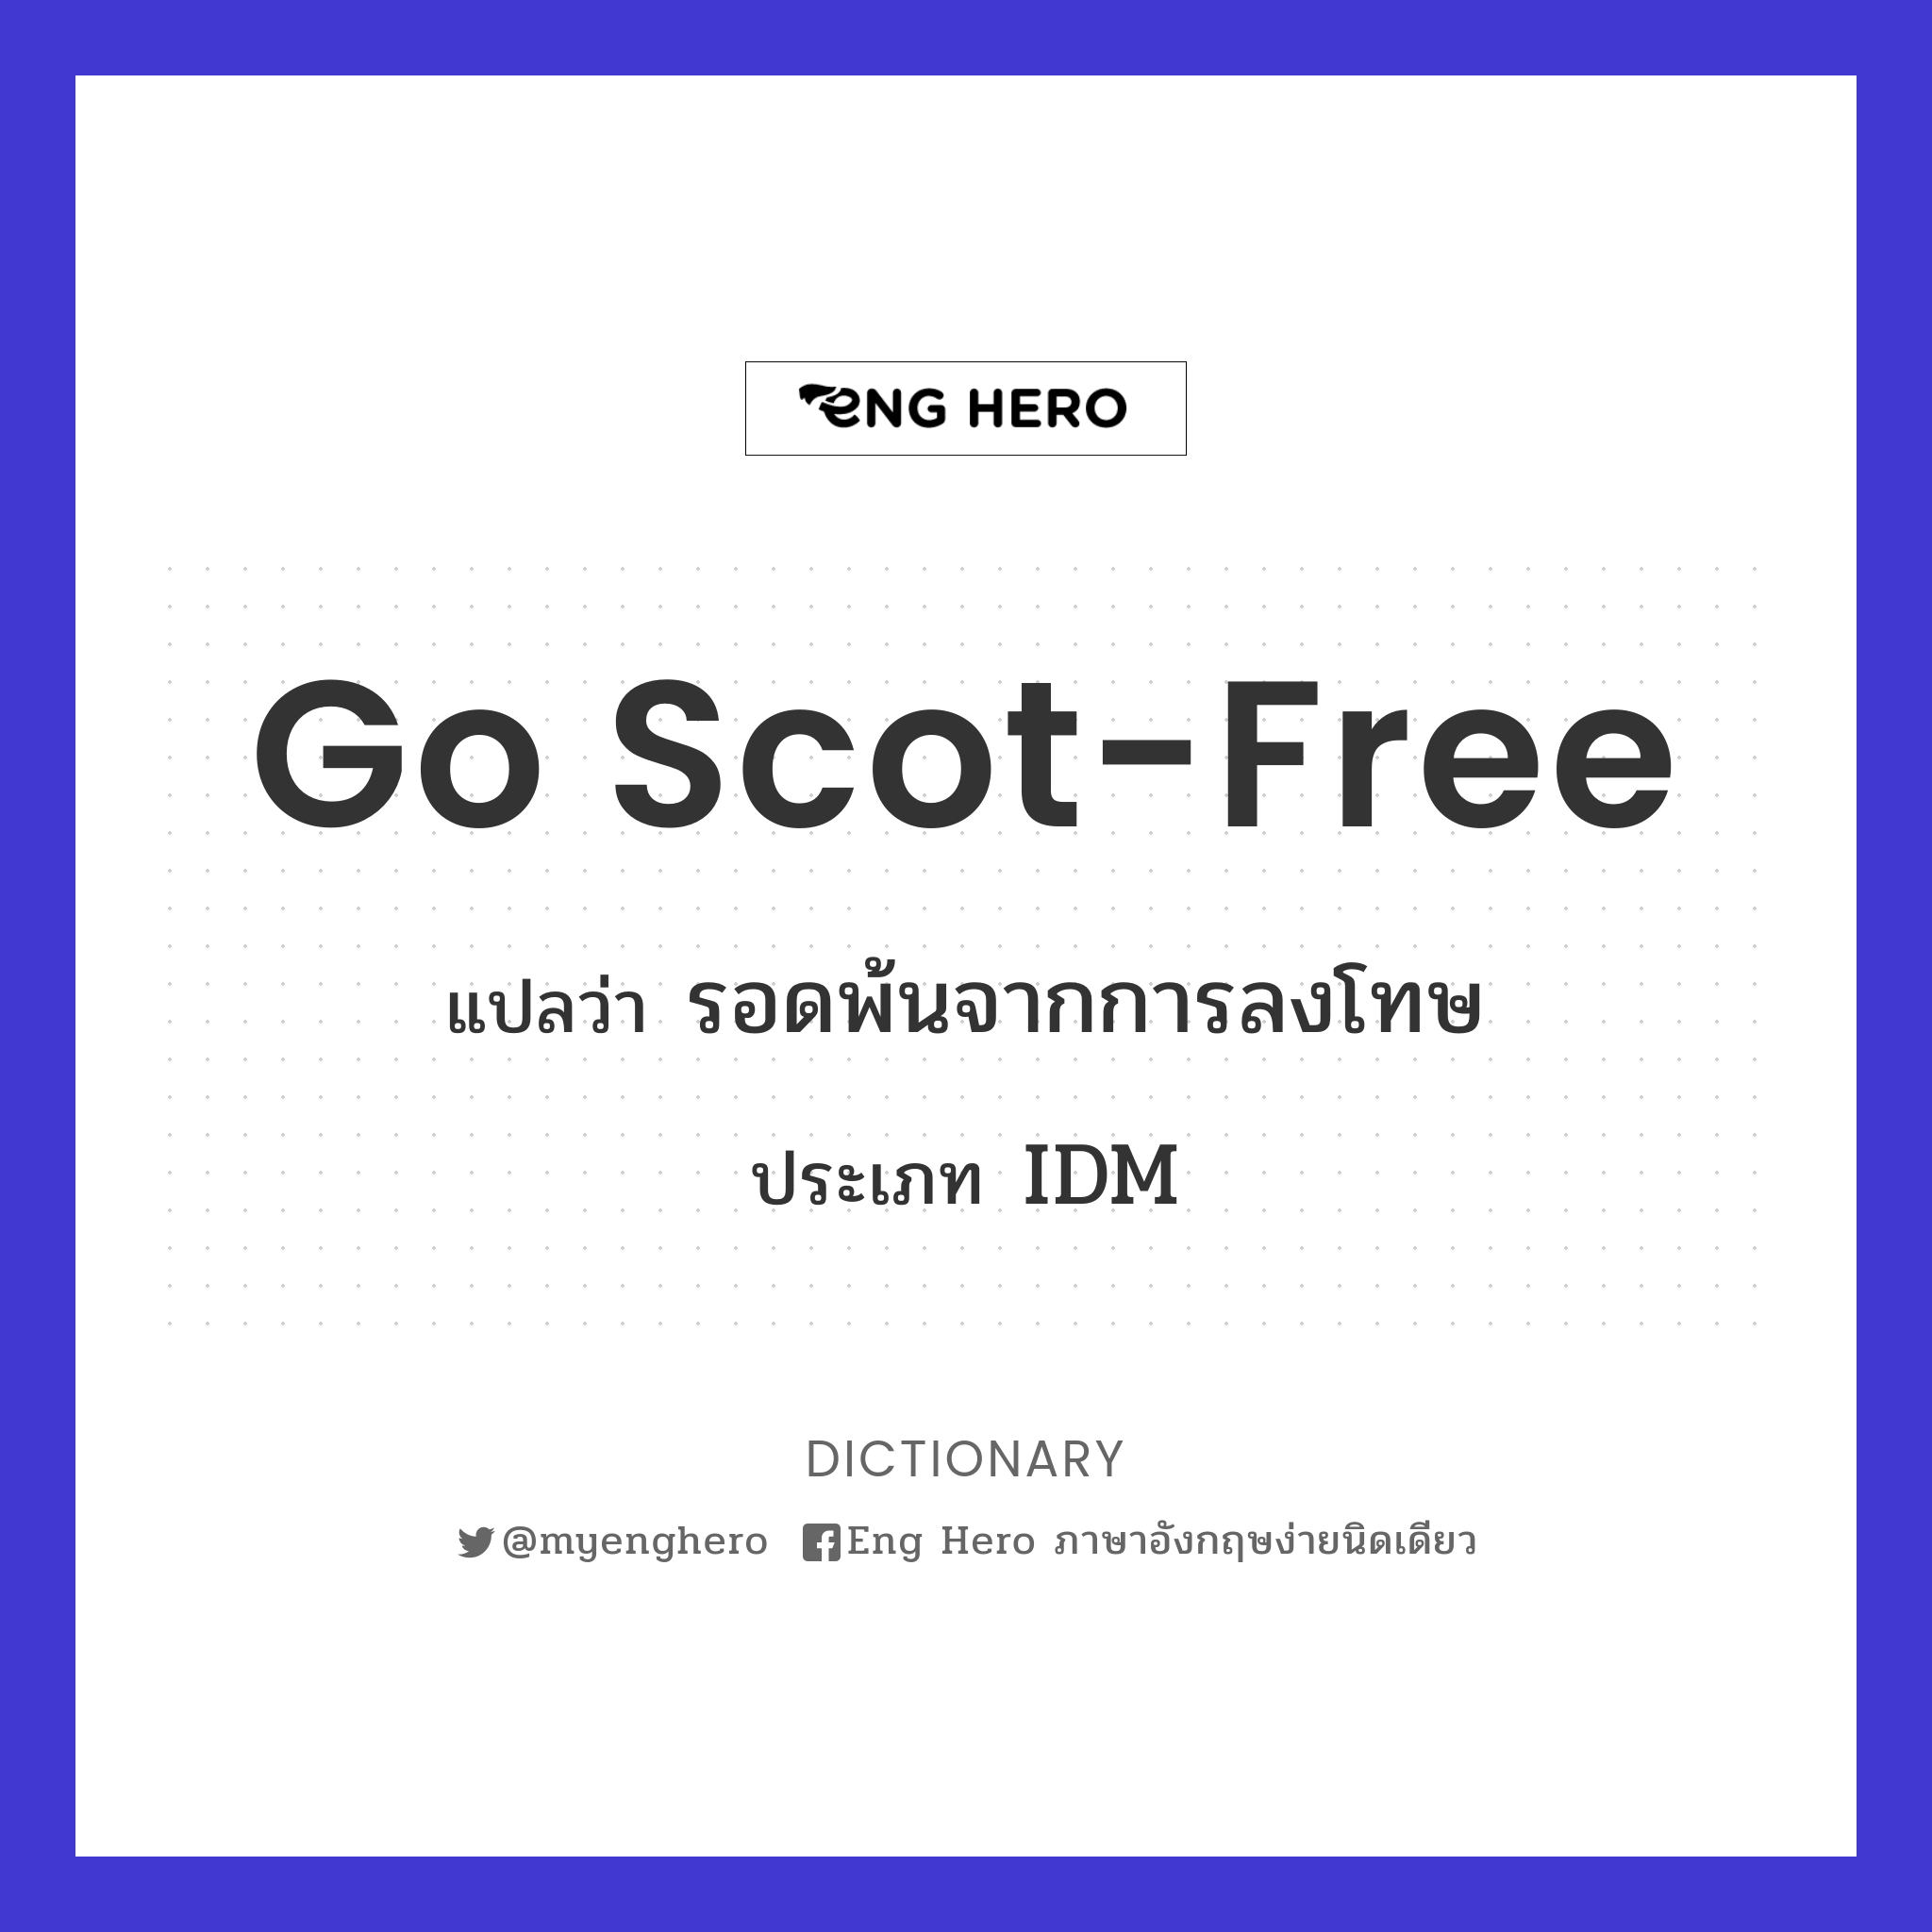 go scot-free